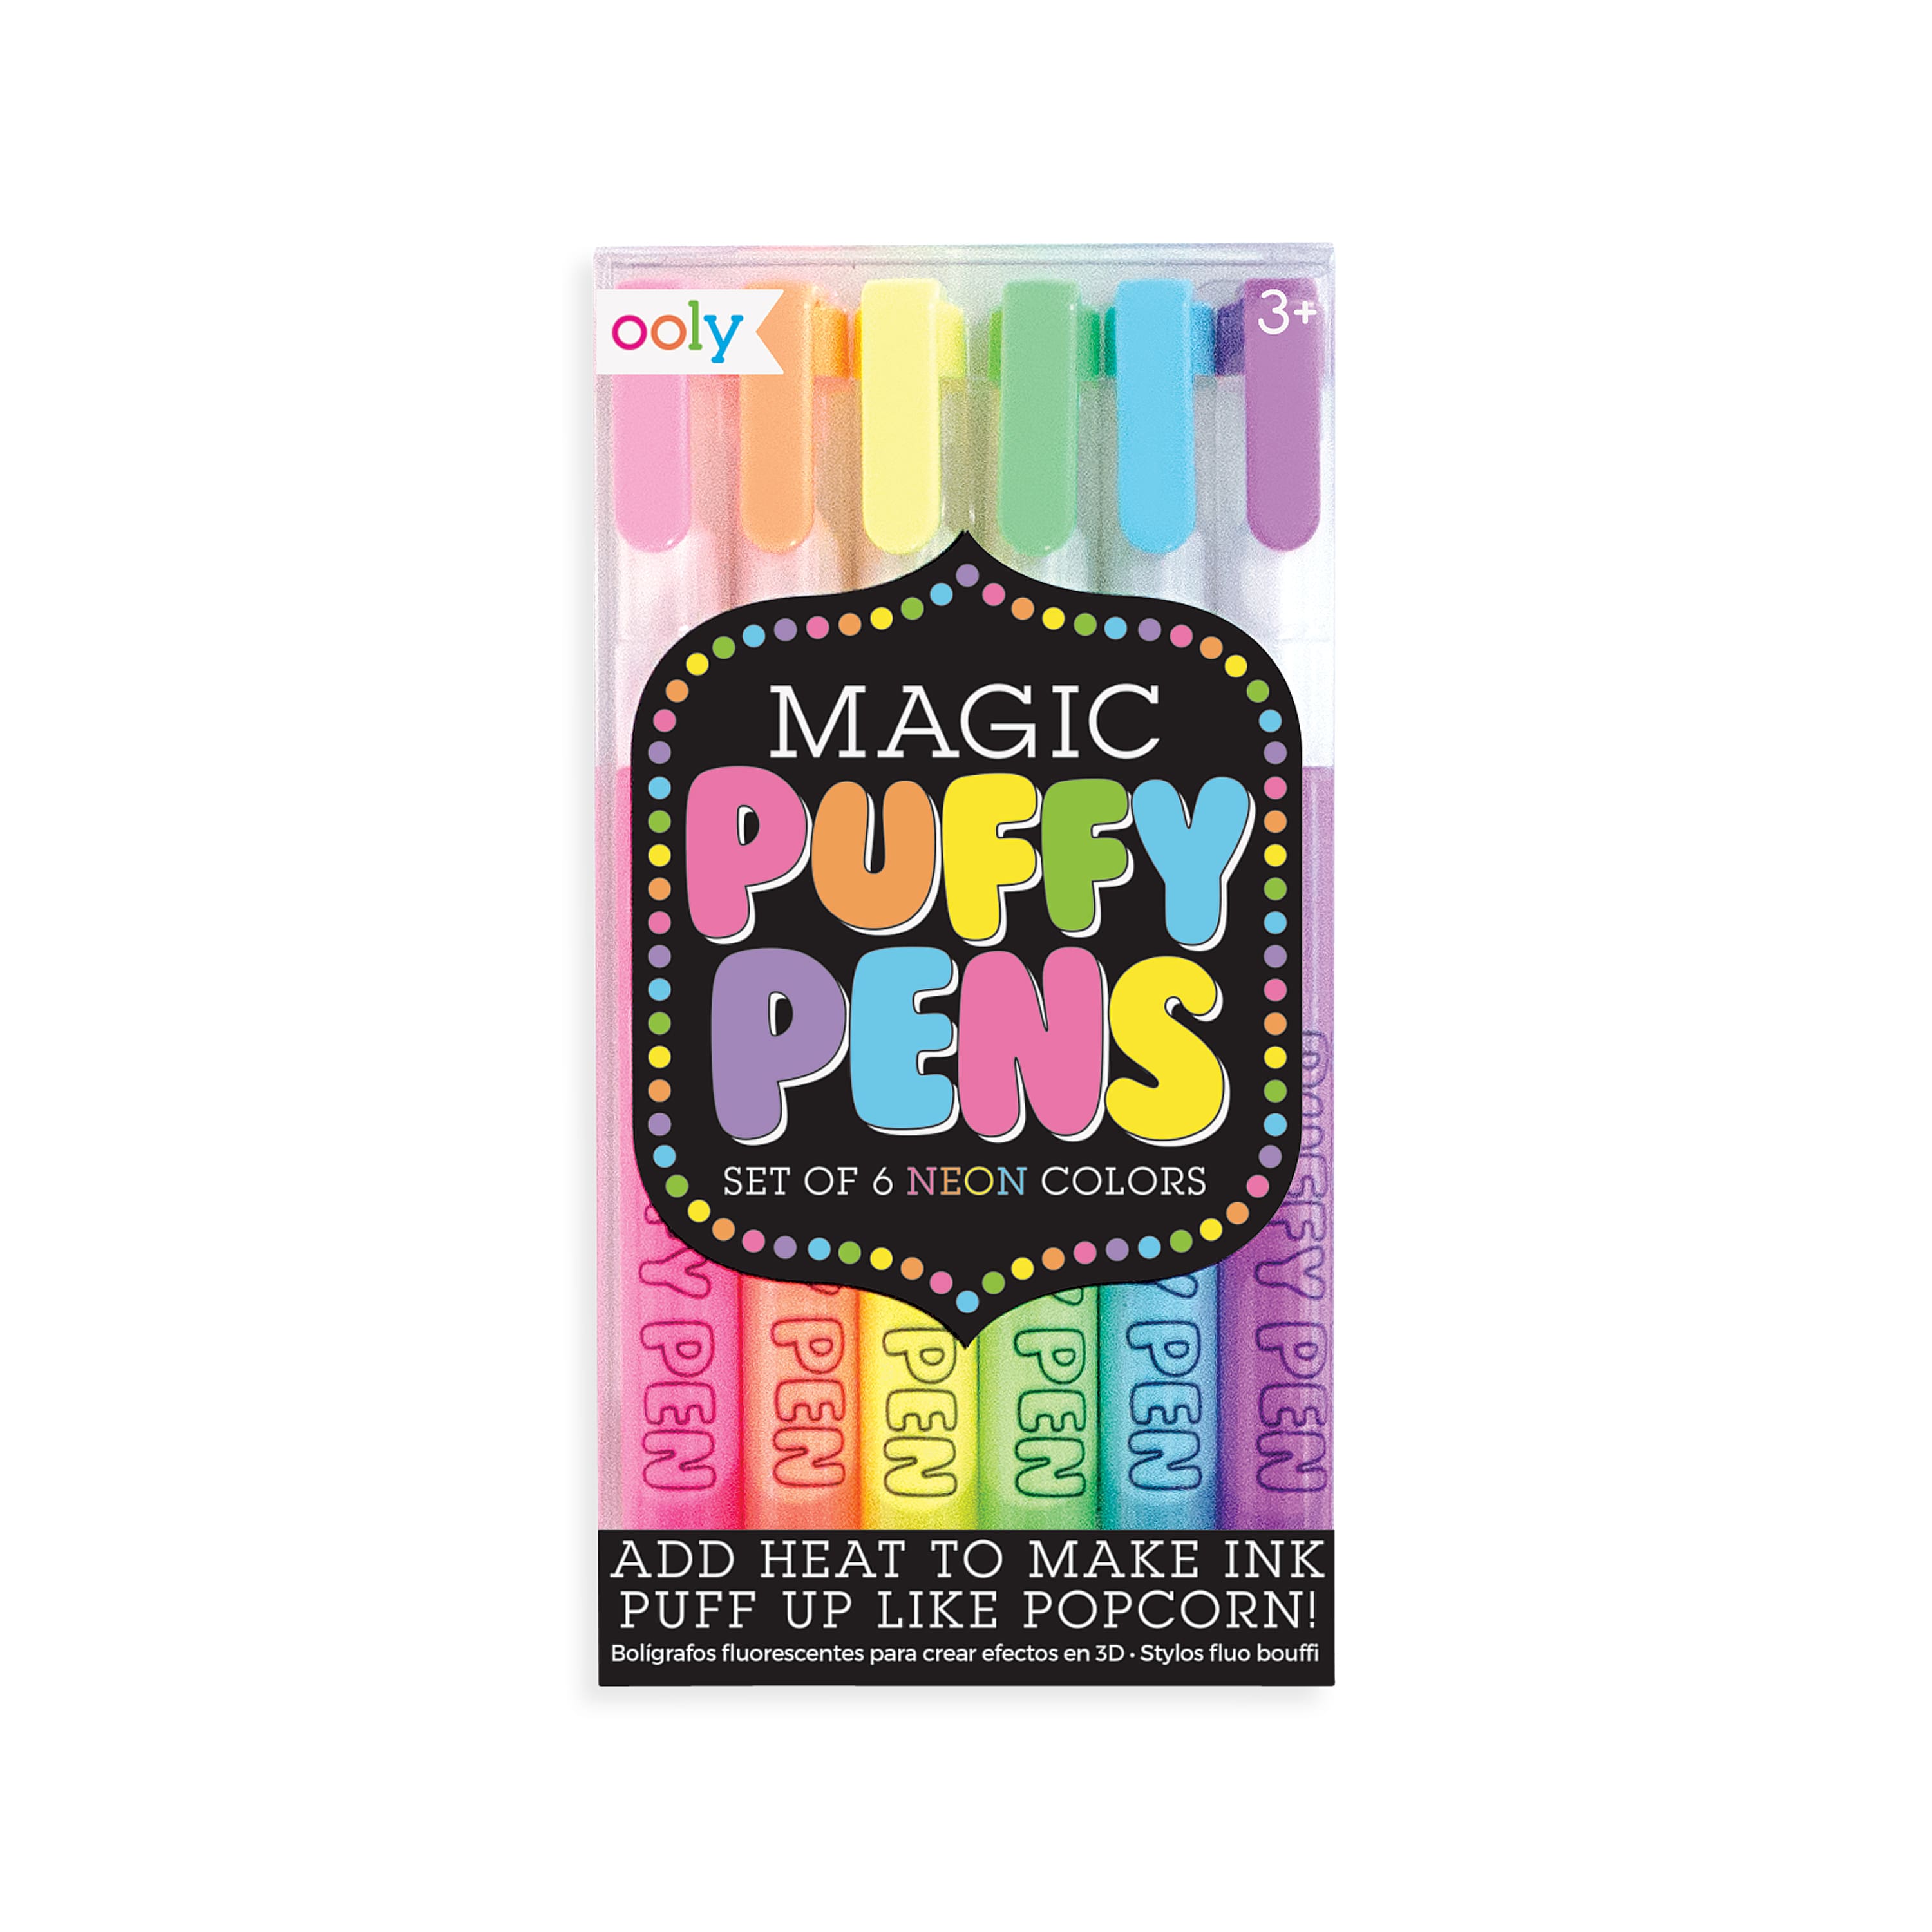 Advertising Mardi Gras Magic Pens